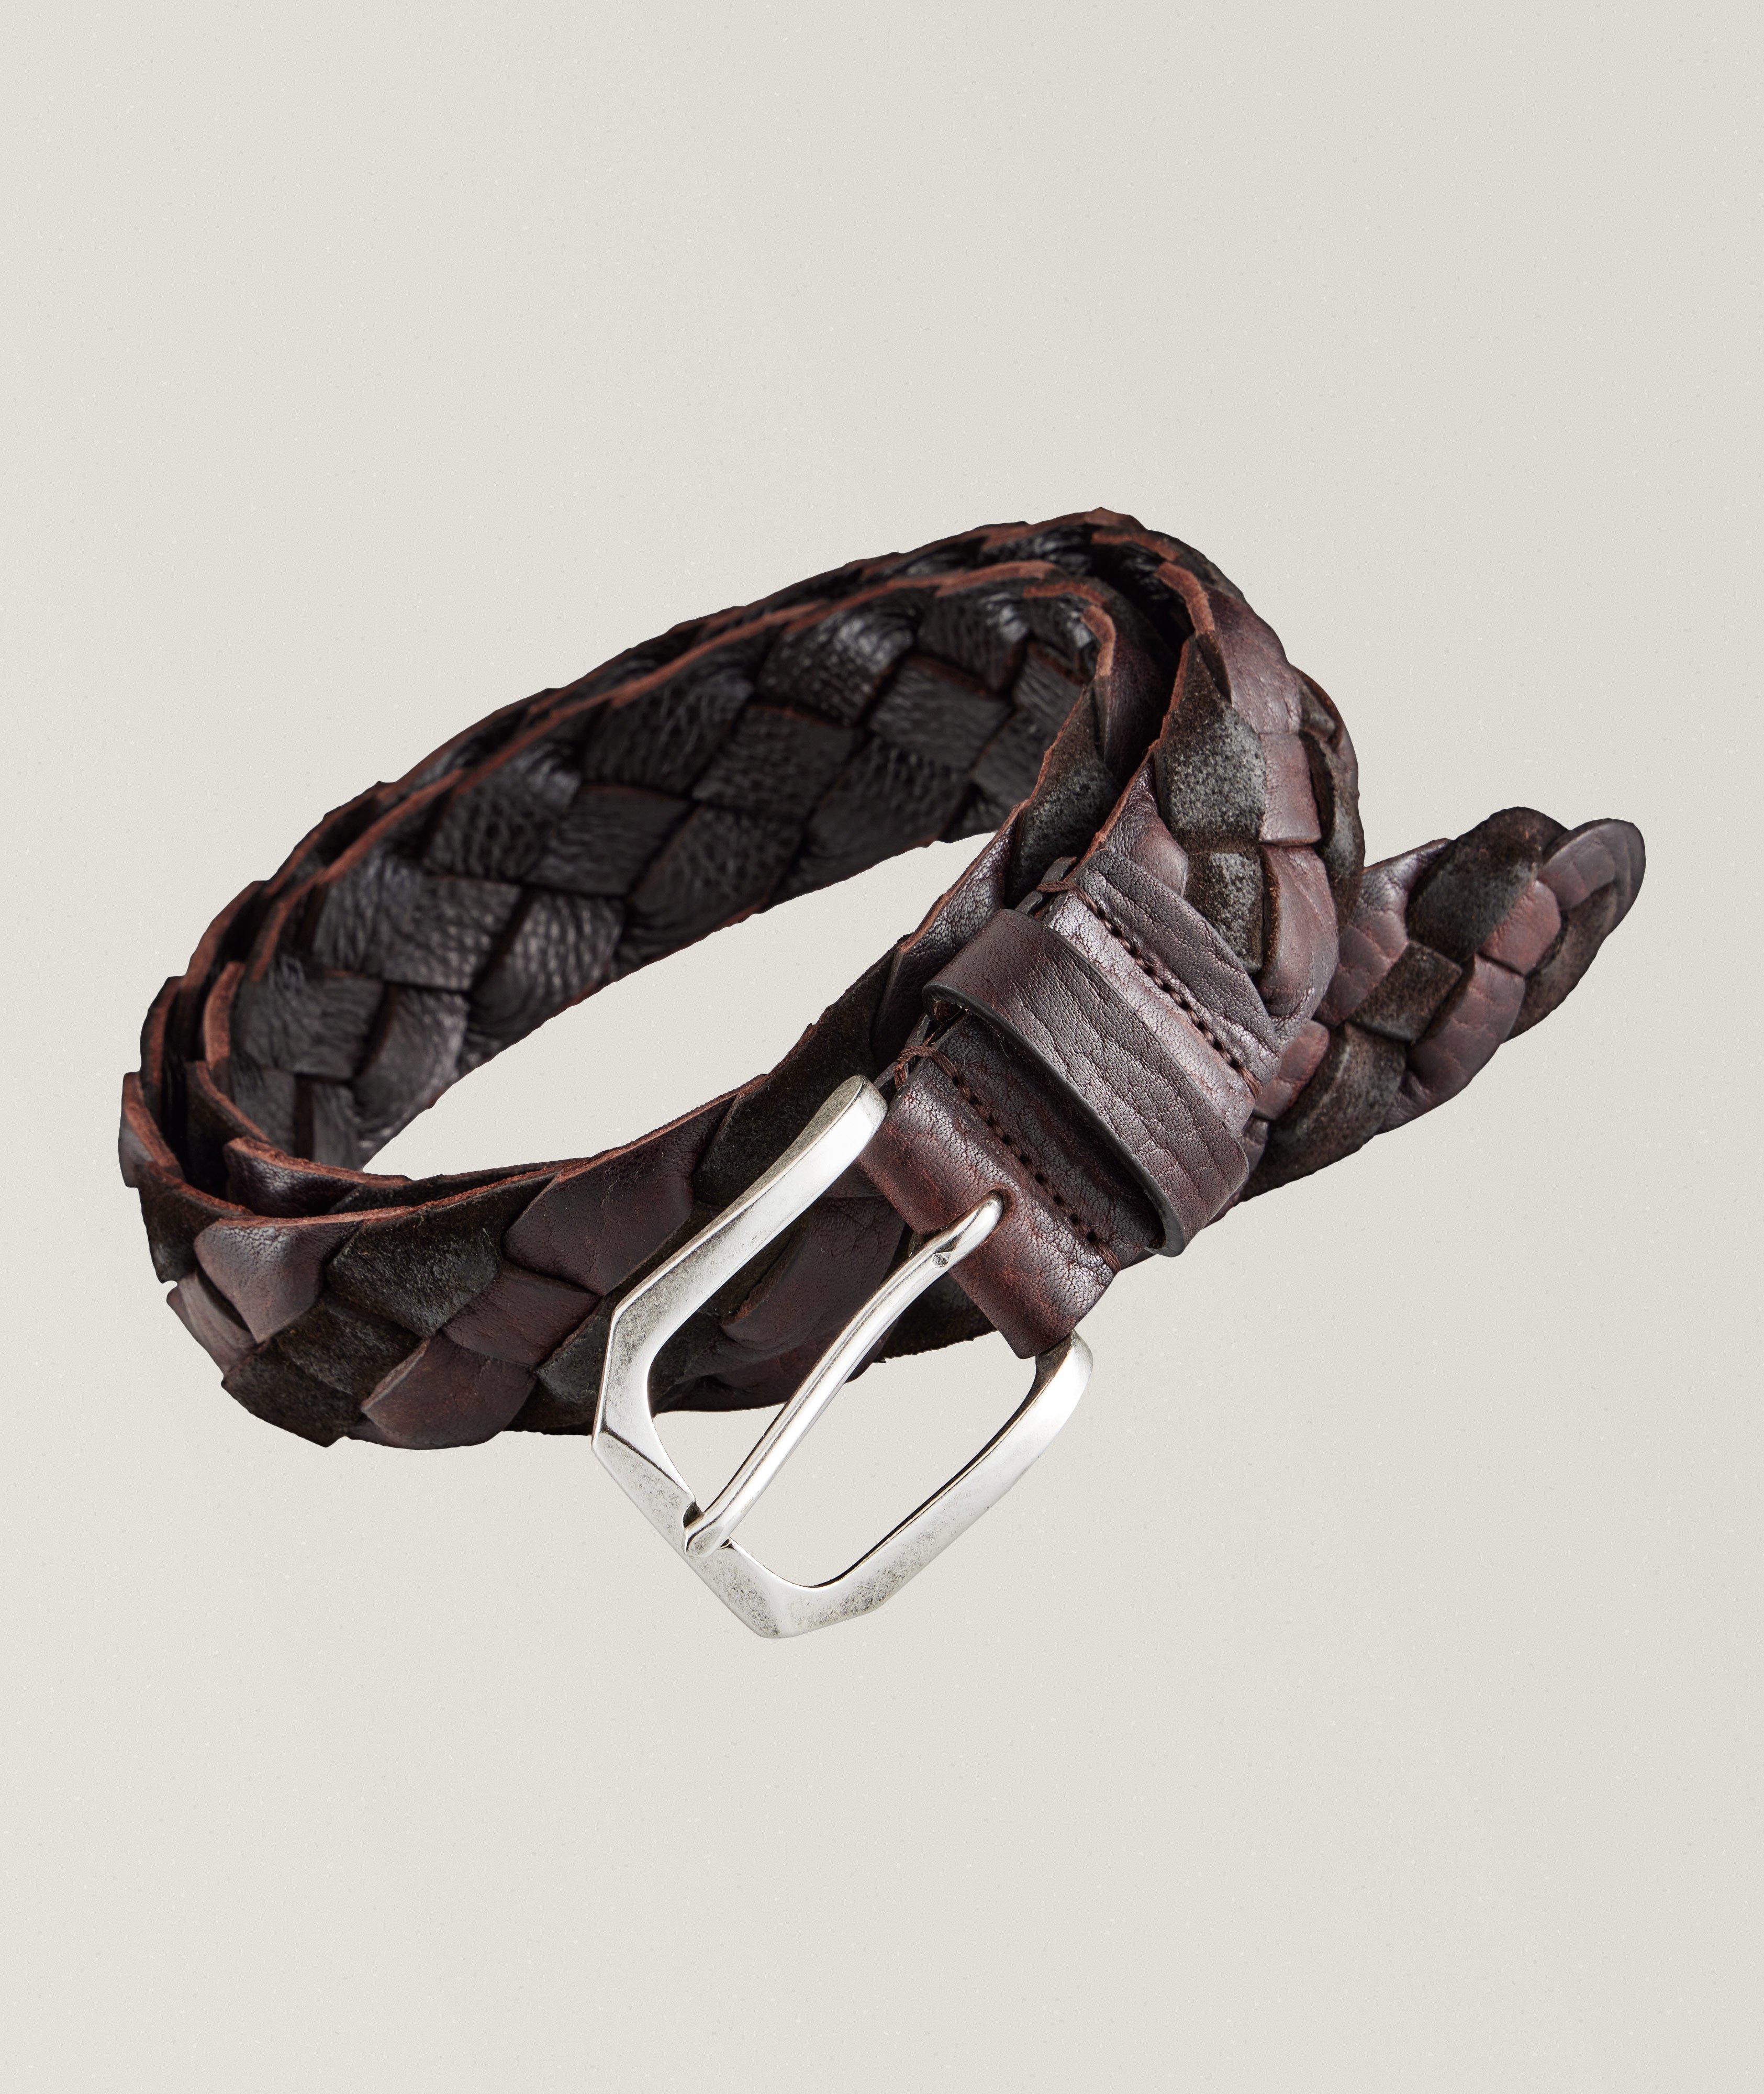 Men's Woven Leather Belt